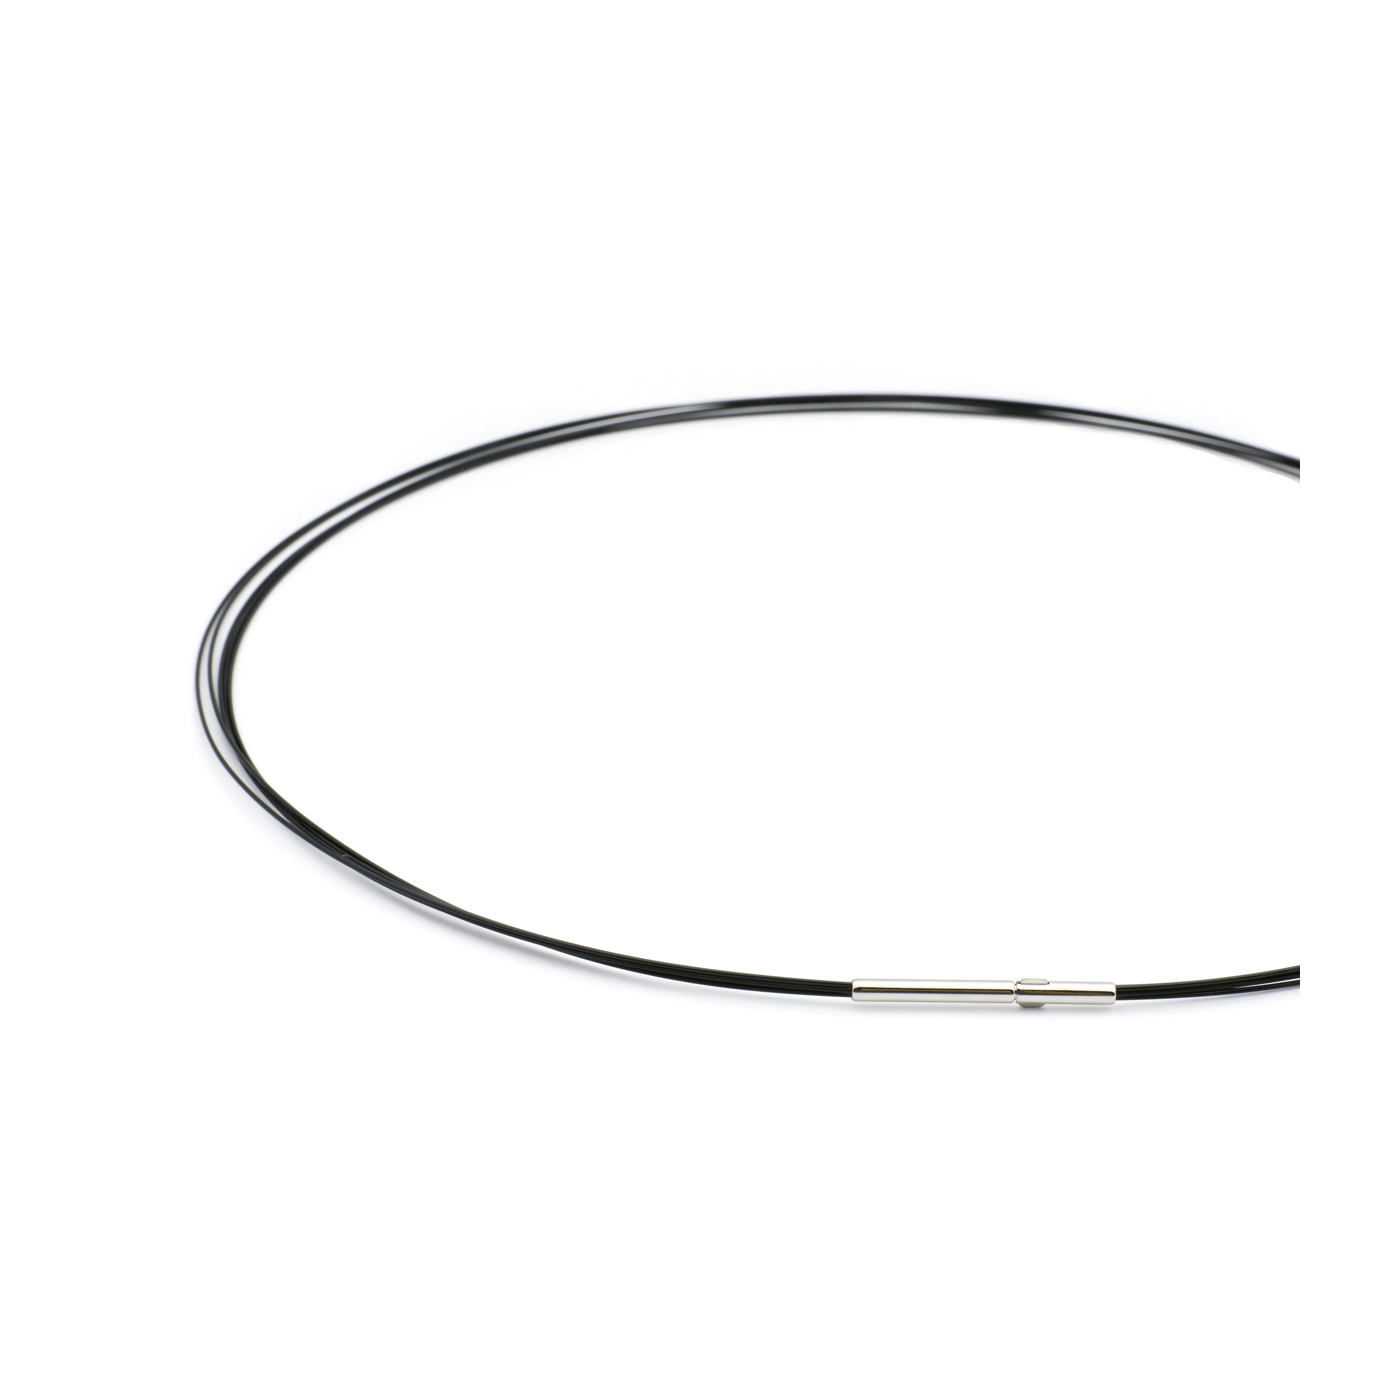 Seilcollier "Colour Cable", ES, schwarz, 5-reihig, 42 cm - 1 Stück